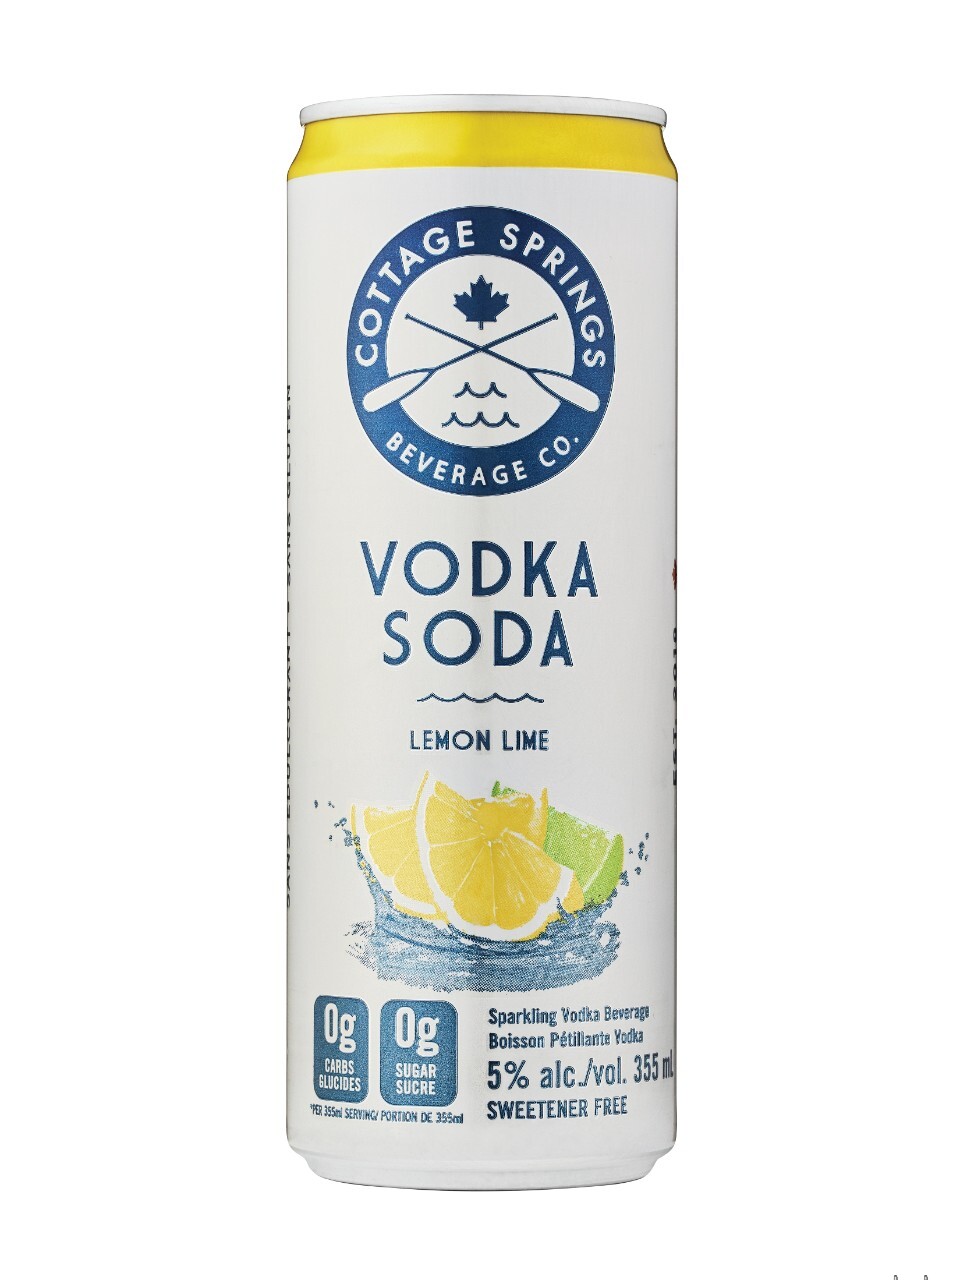 what percent alcohol is vodka soda